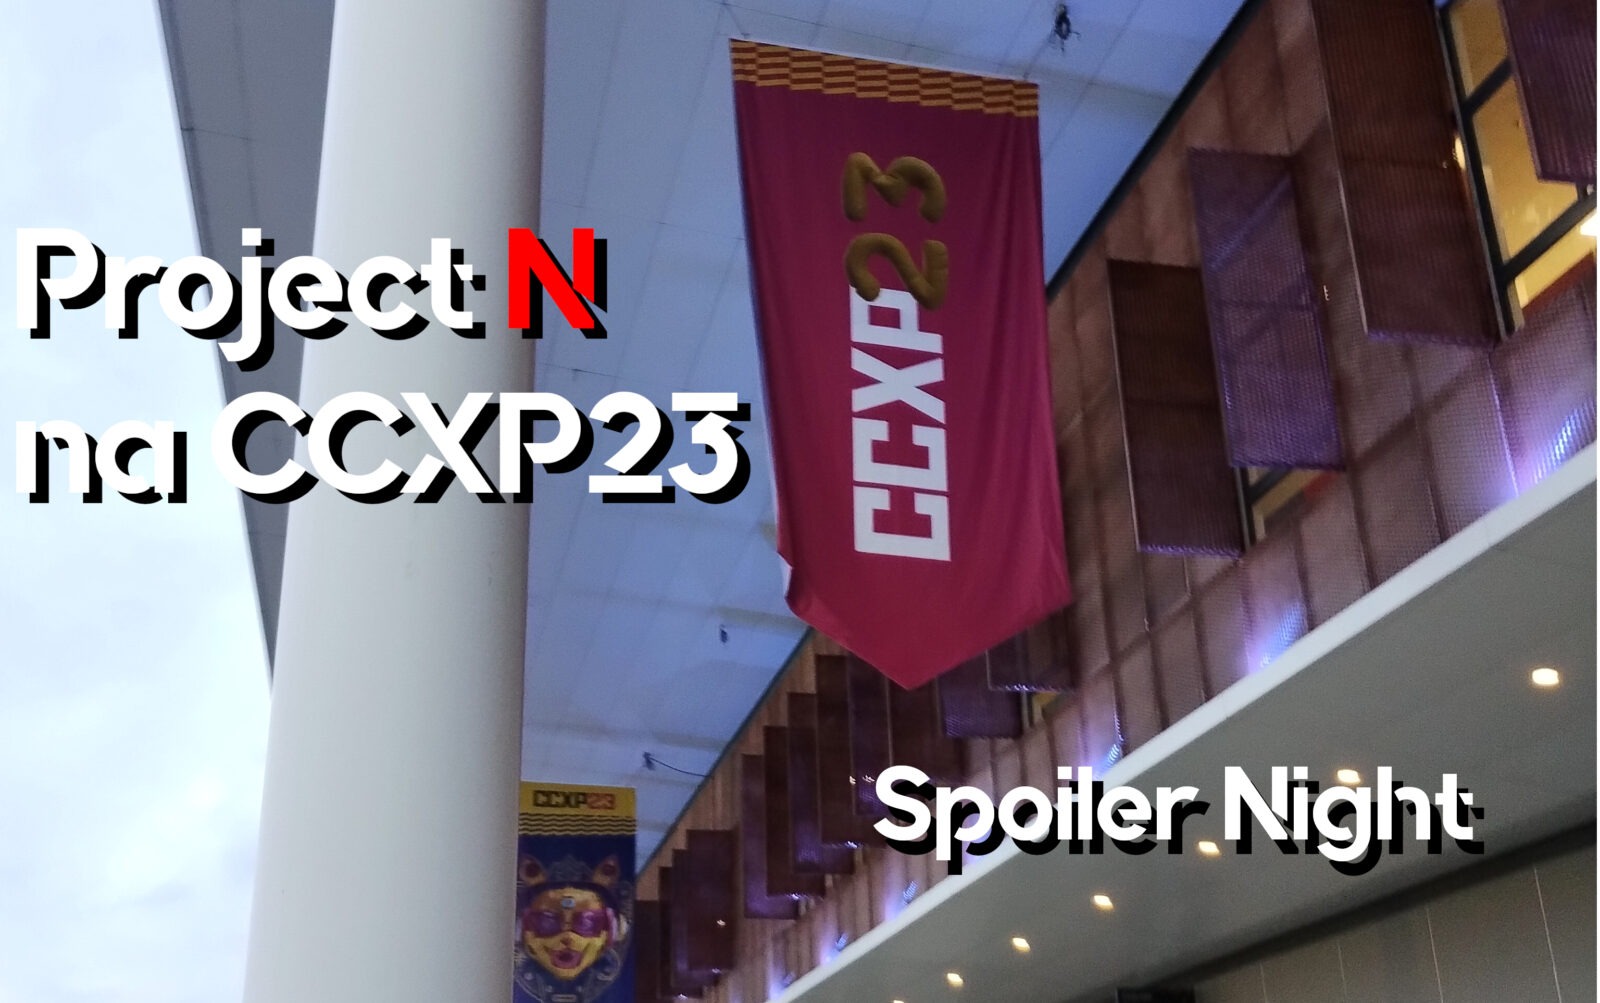 CCXP23 - Spoiler Night